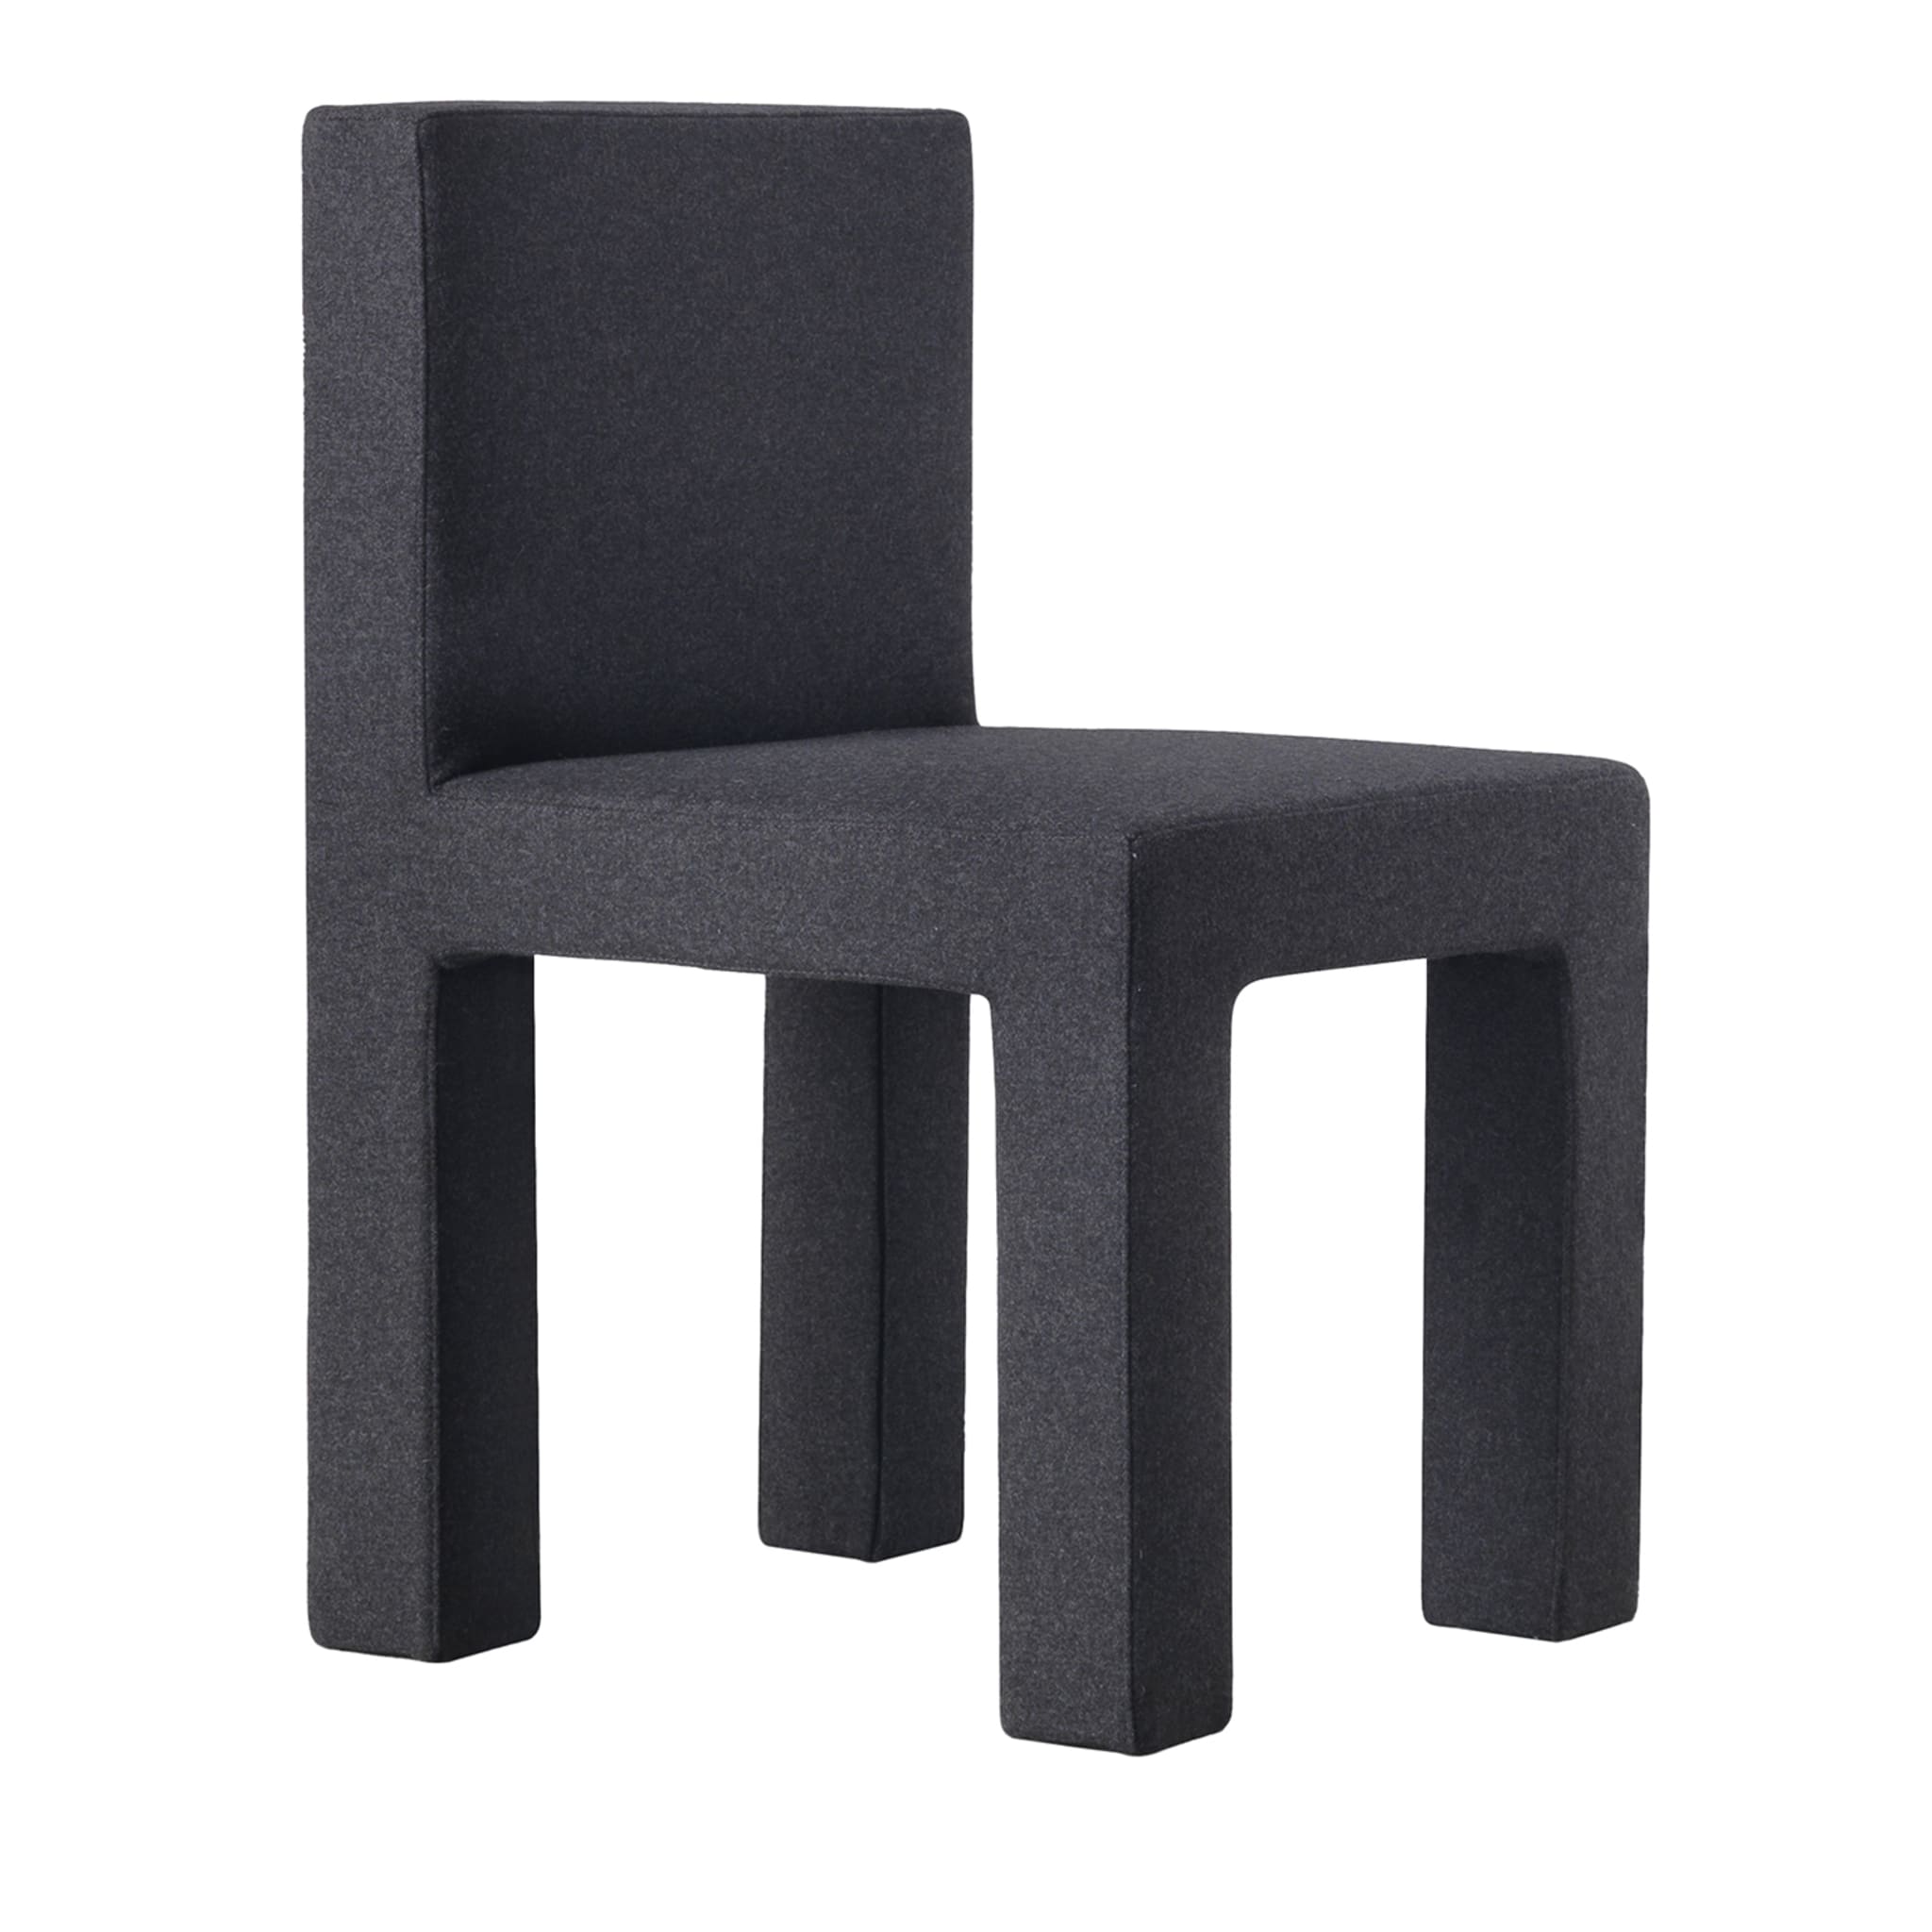 Quadrata Gray Chair by Dainelli Studio - Main view